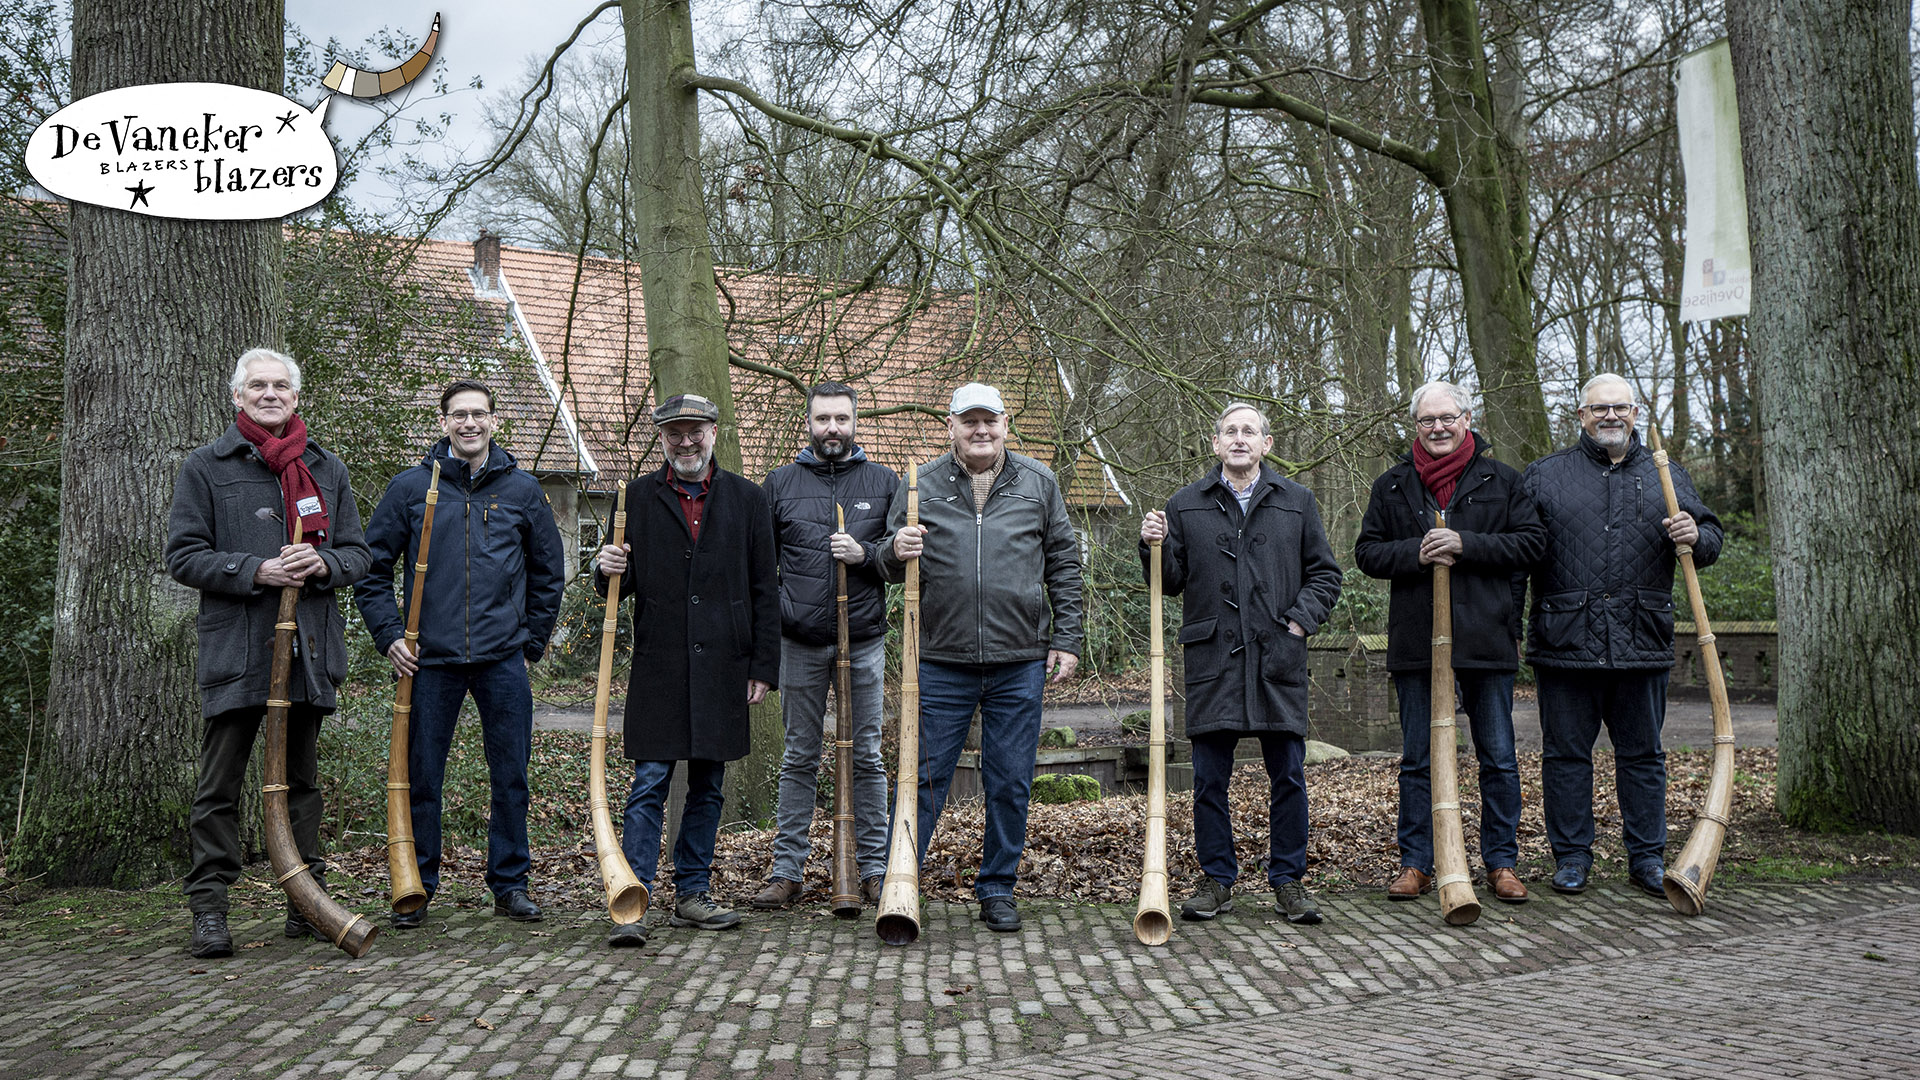 Midwinterhoorn blazers groep in Enschede 2021